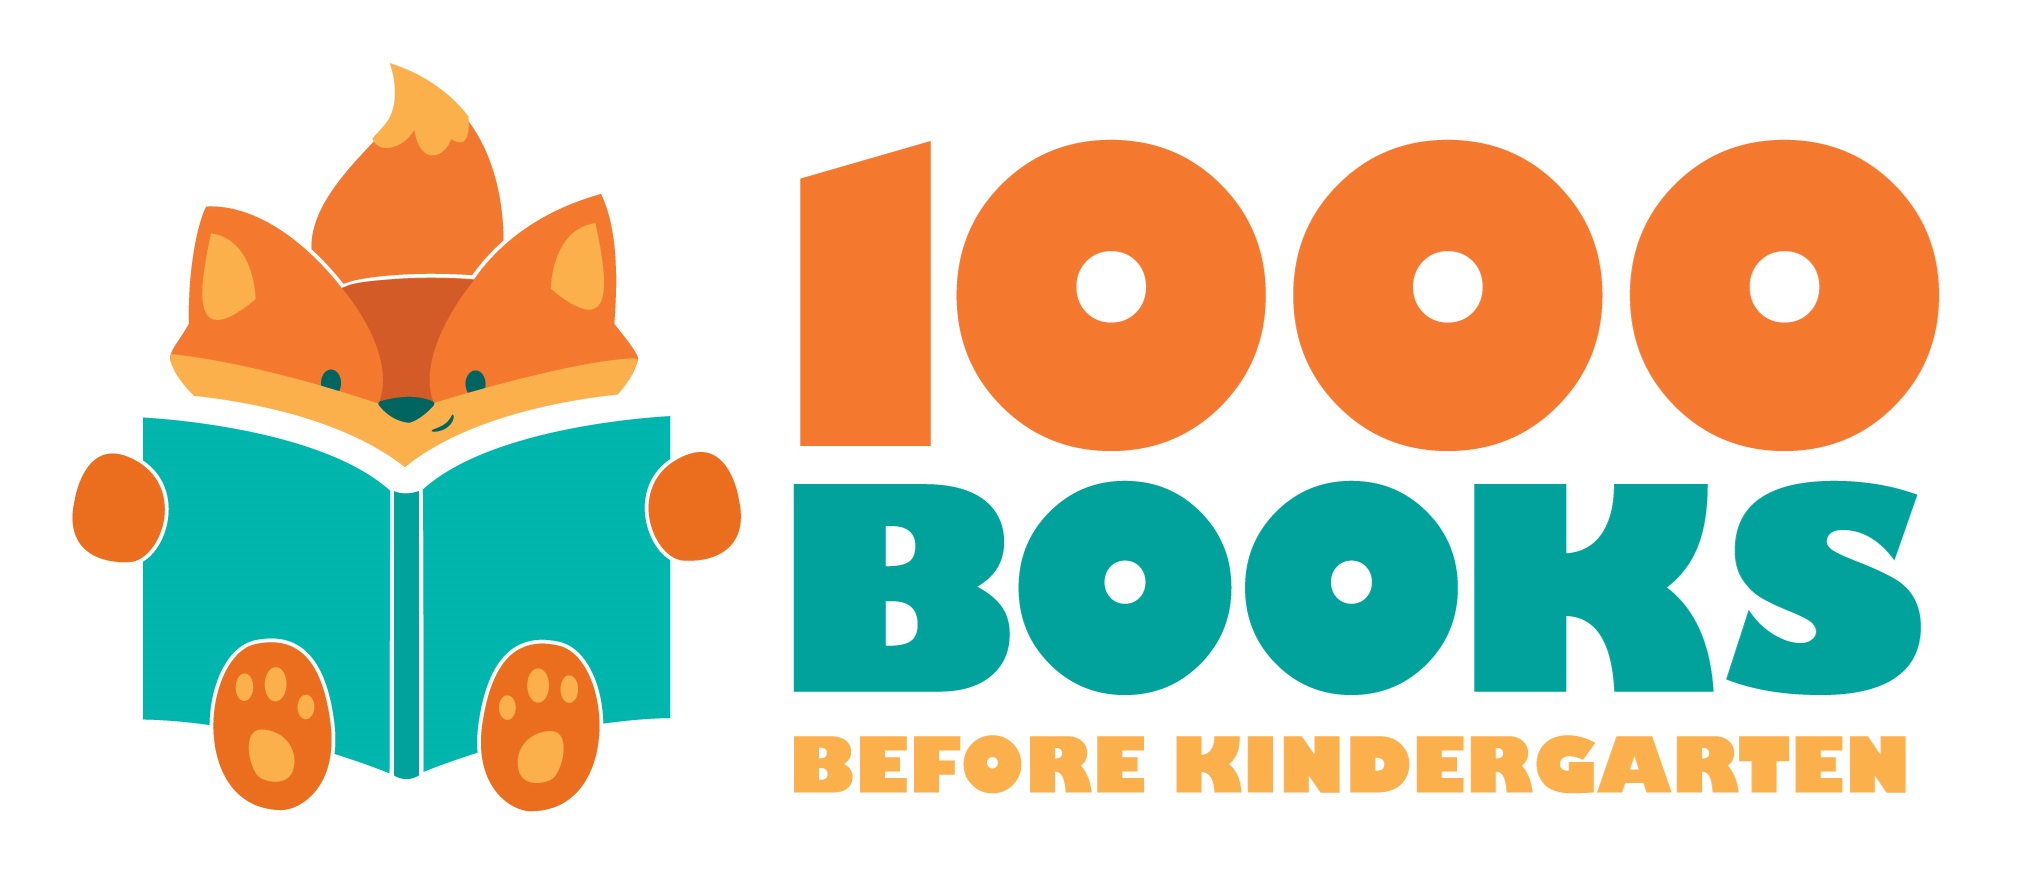 1000 Book Before Kindergarten logo